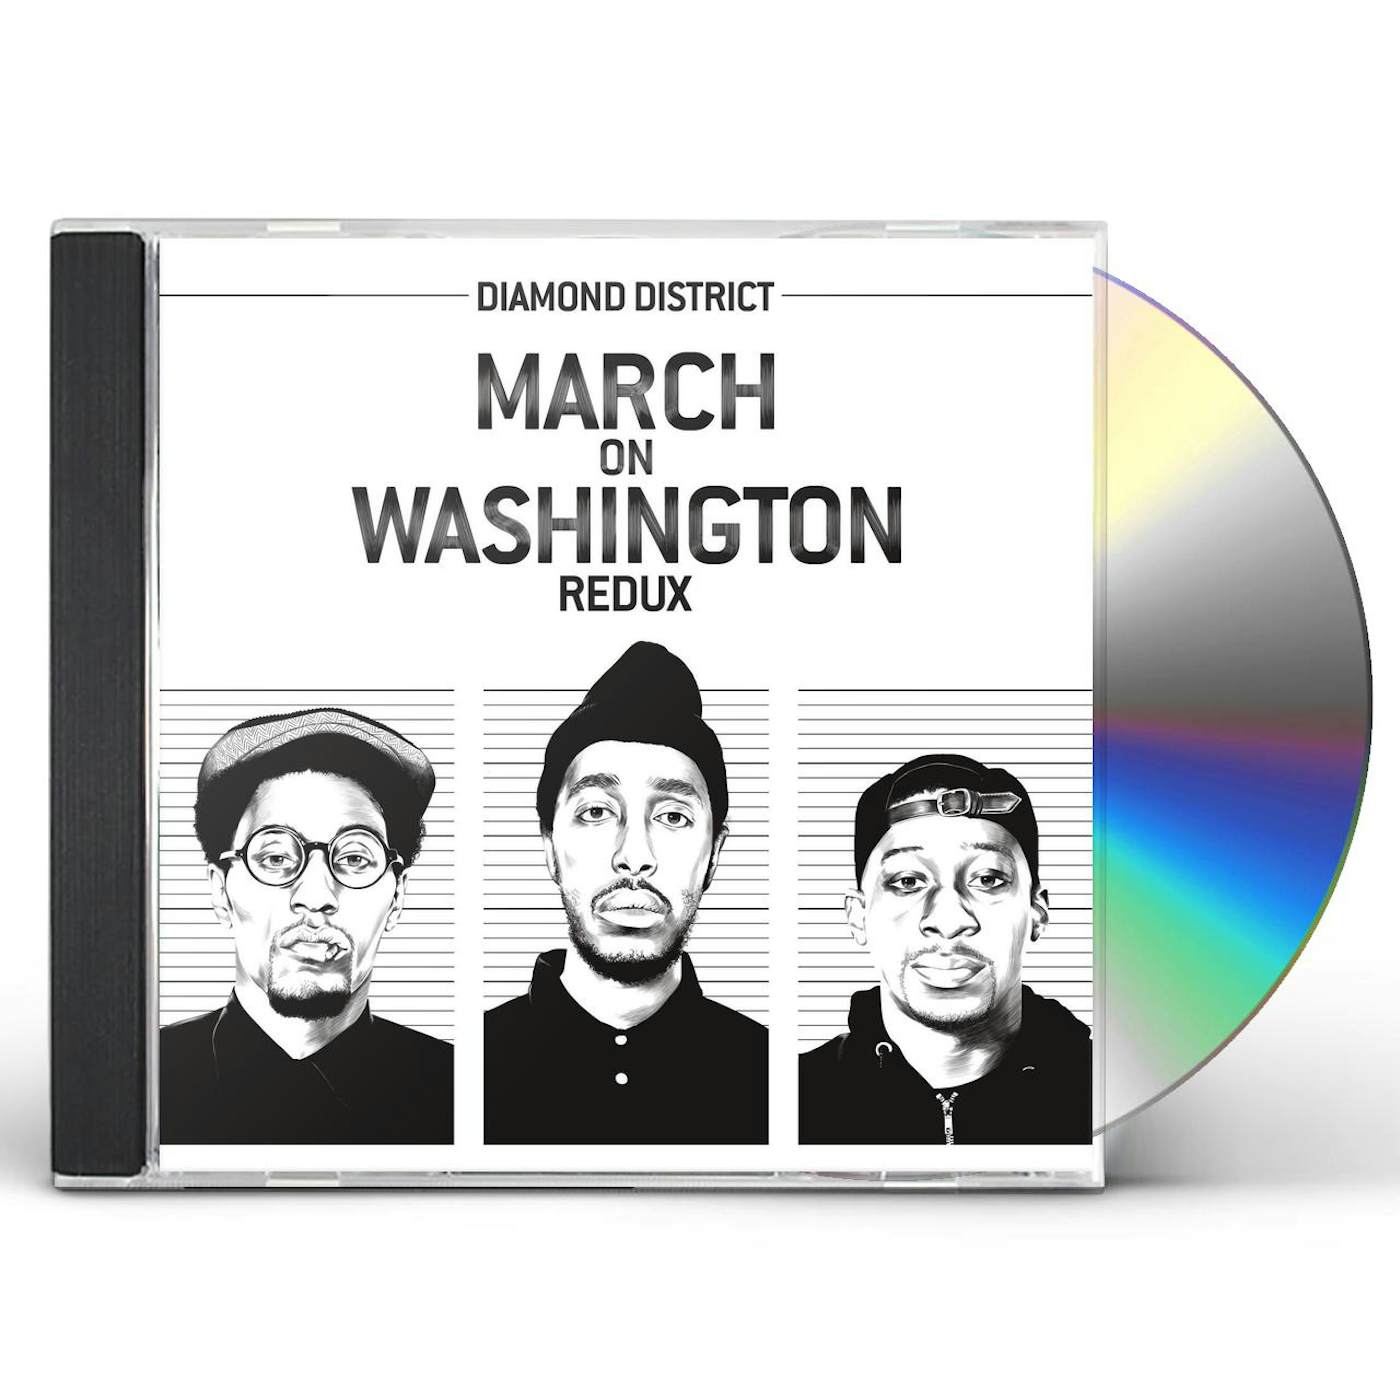 Diamond District MARCH ON WASHINGTON REDUX CD